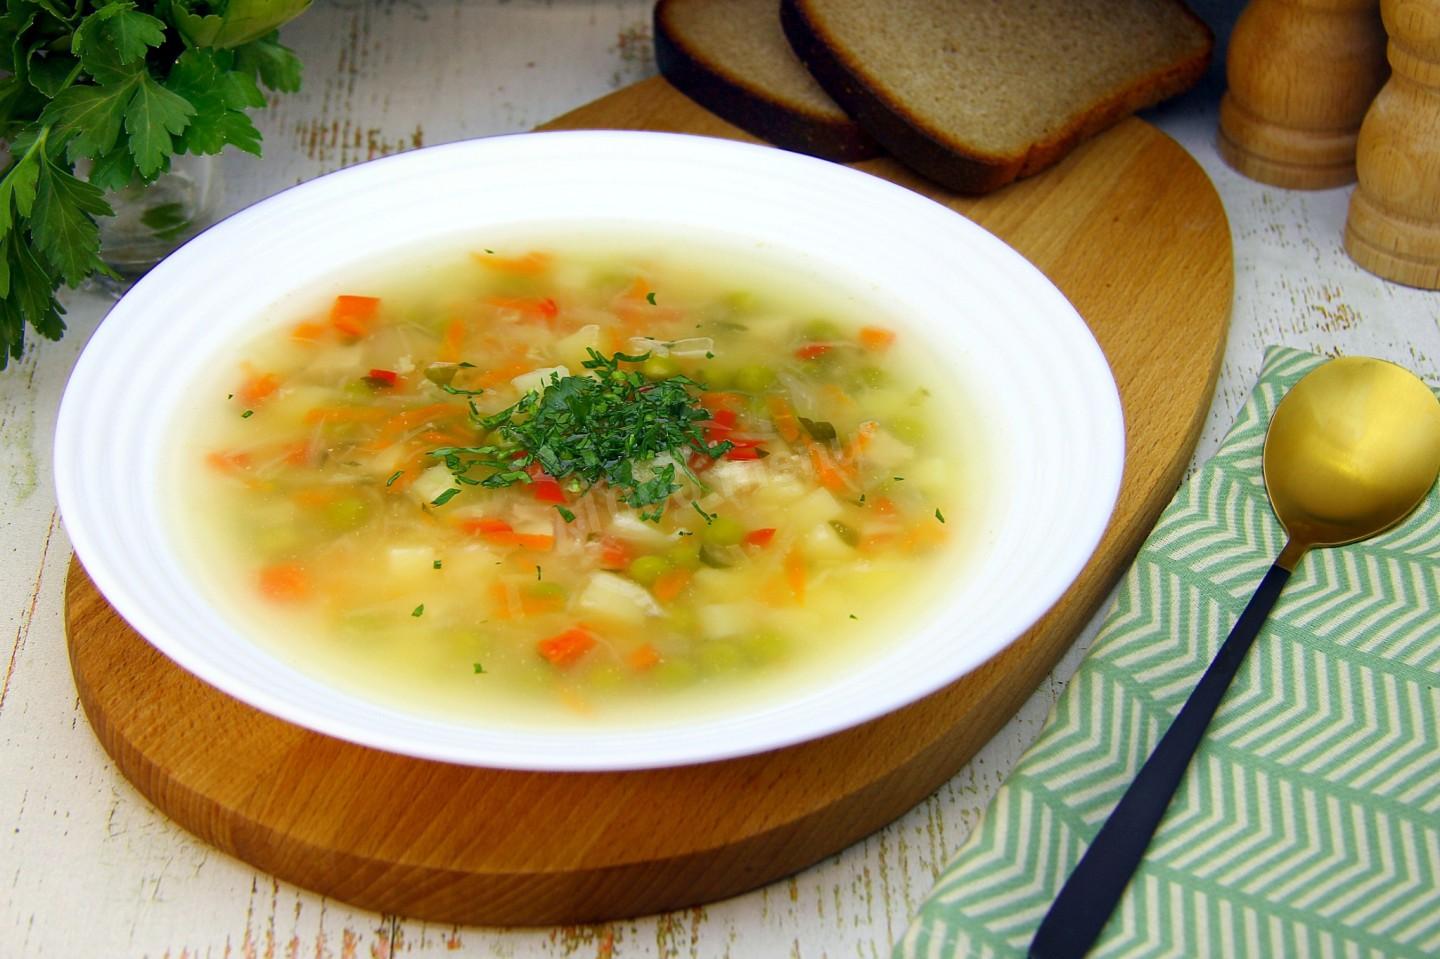 Рецепт Овощного Супа Без Картофеля При Диете